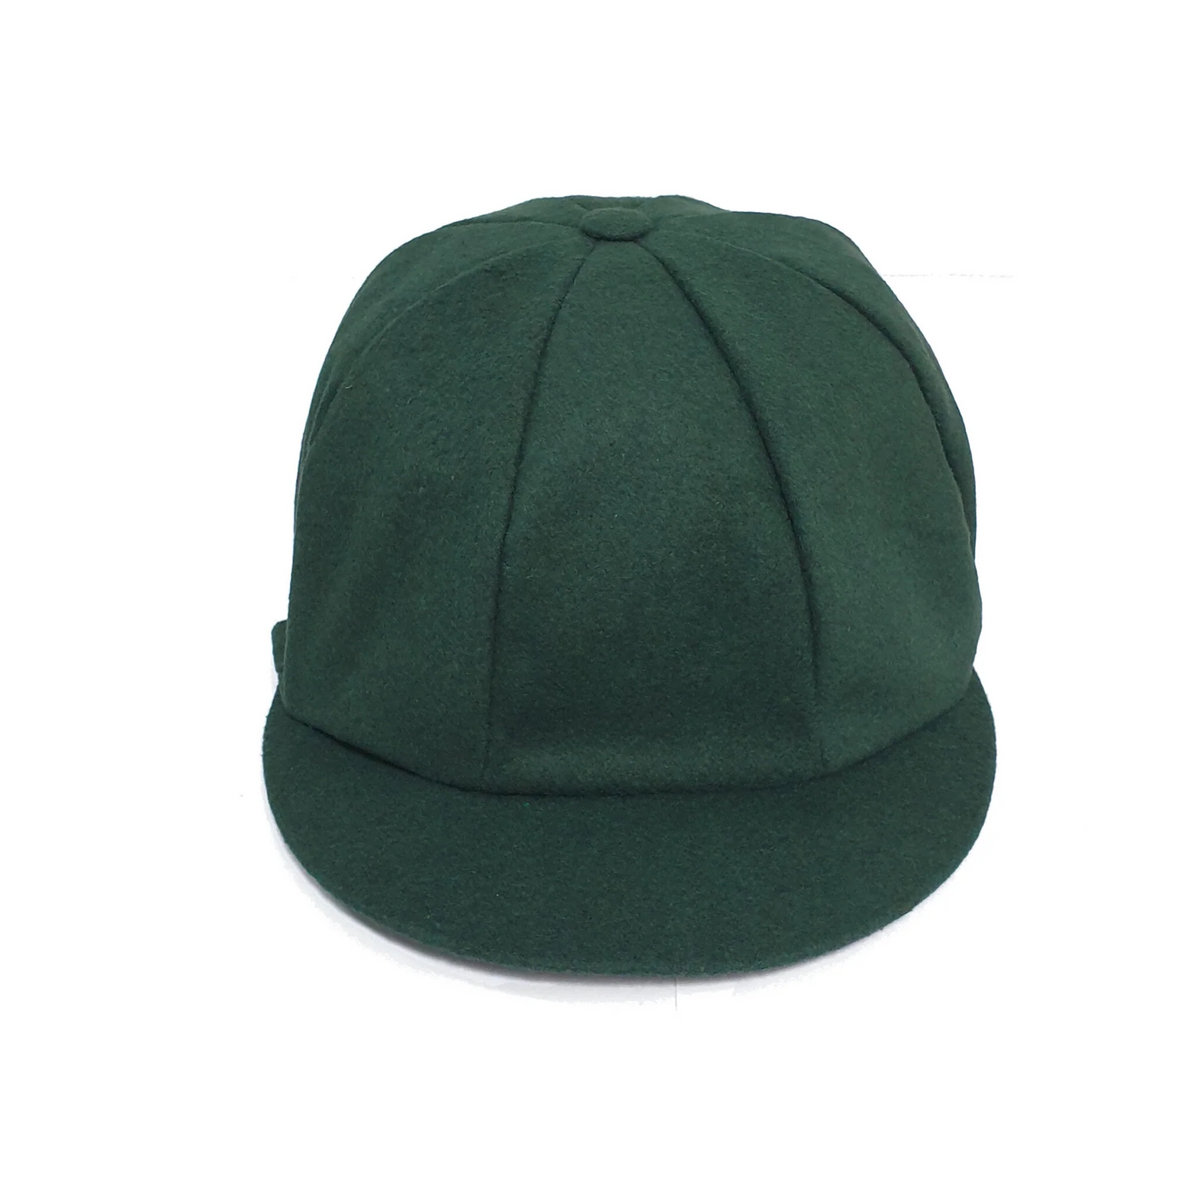 English Style Cricket Cap: Green